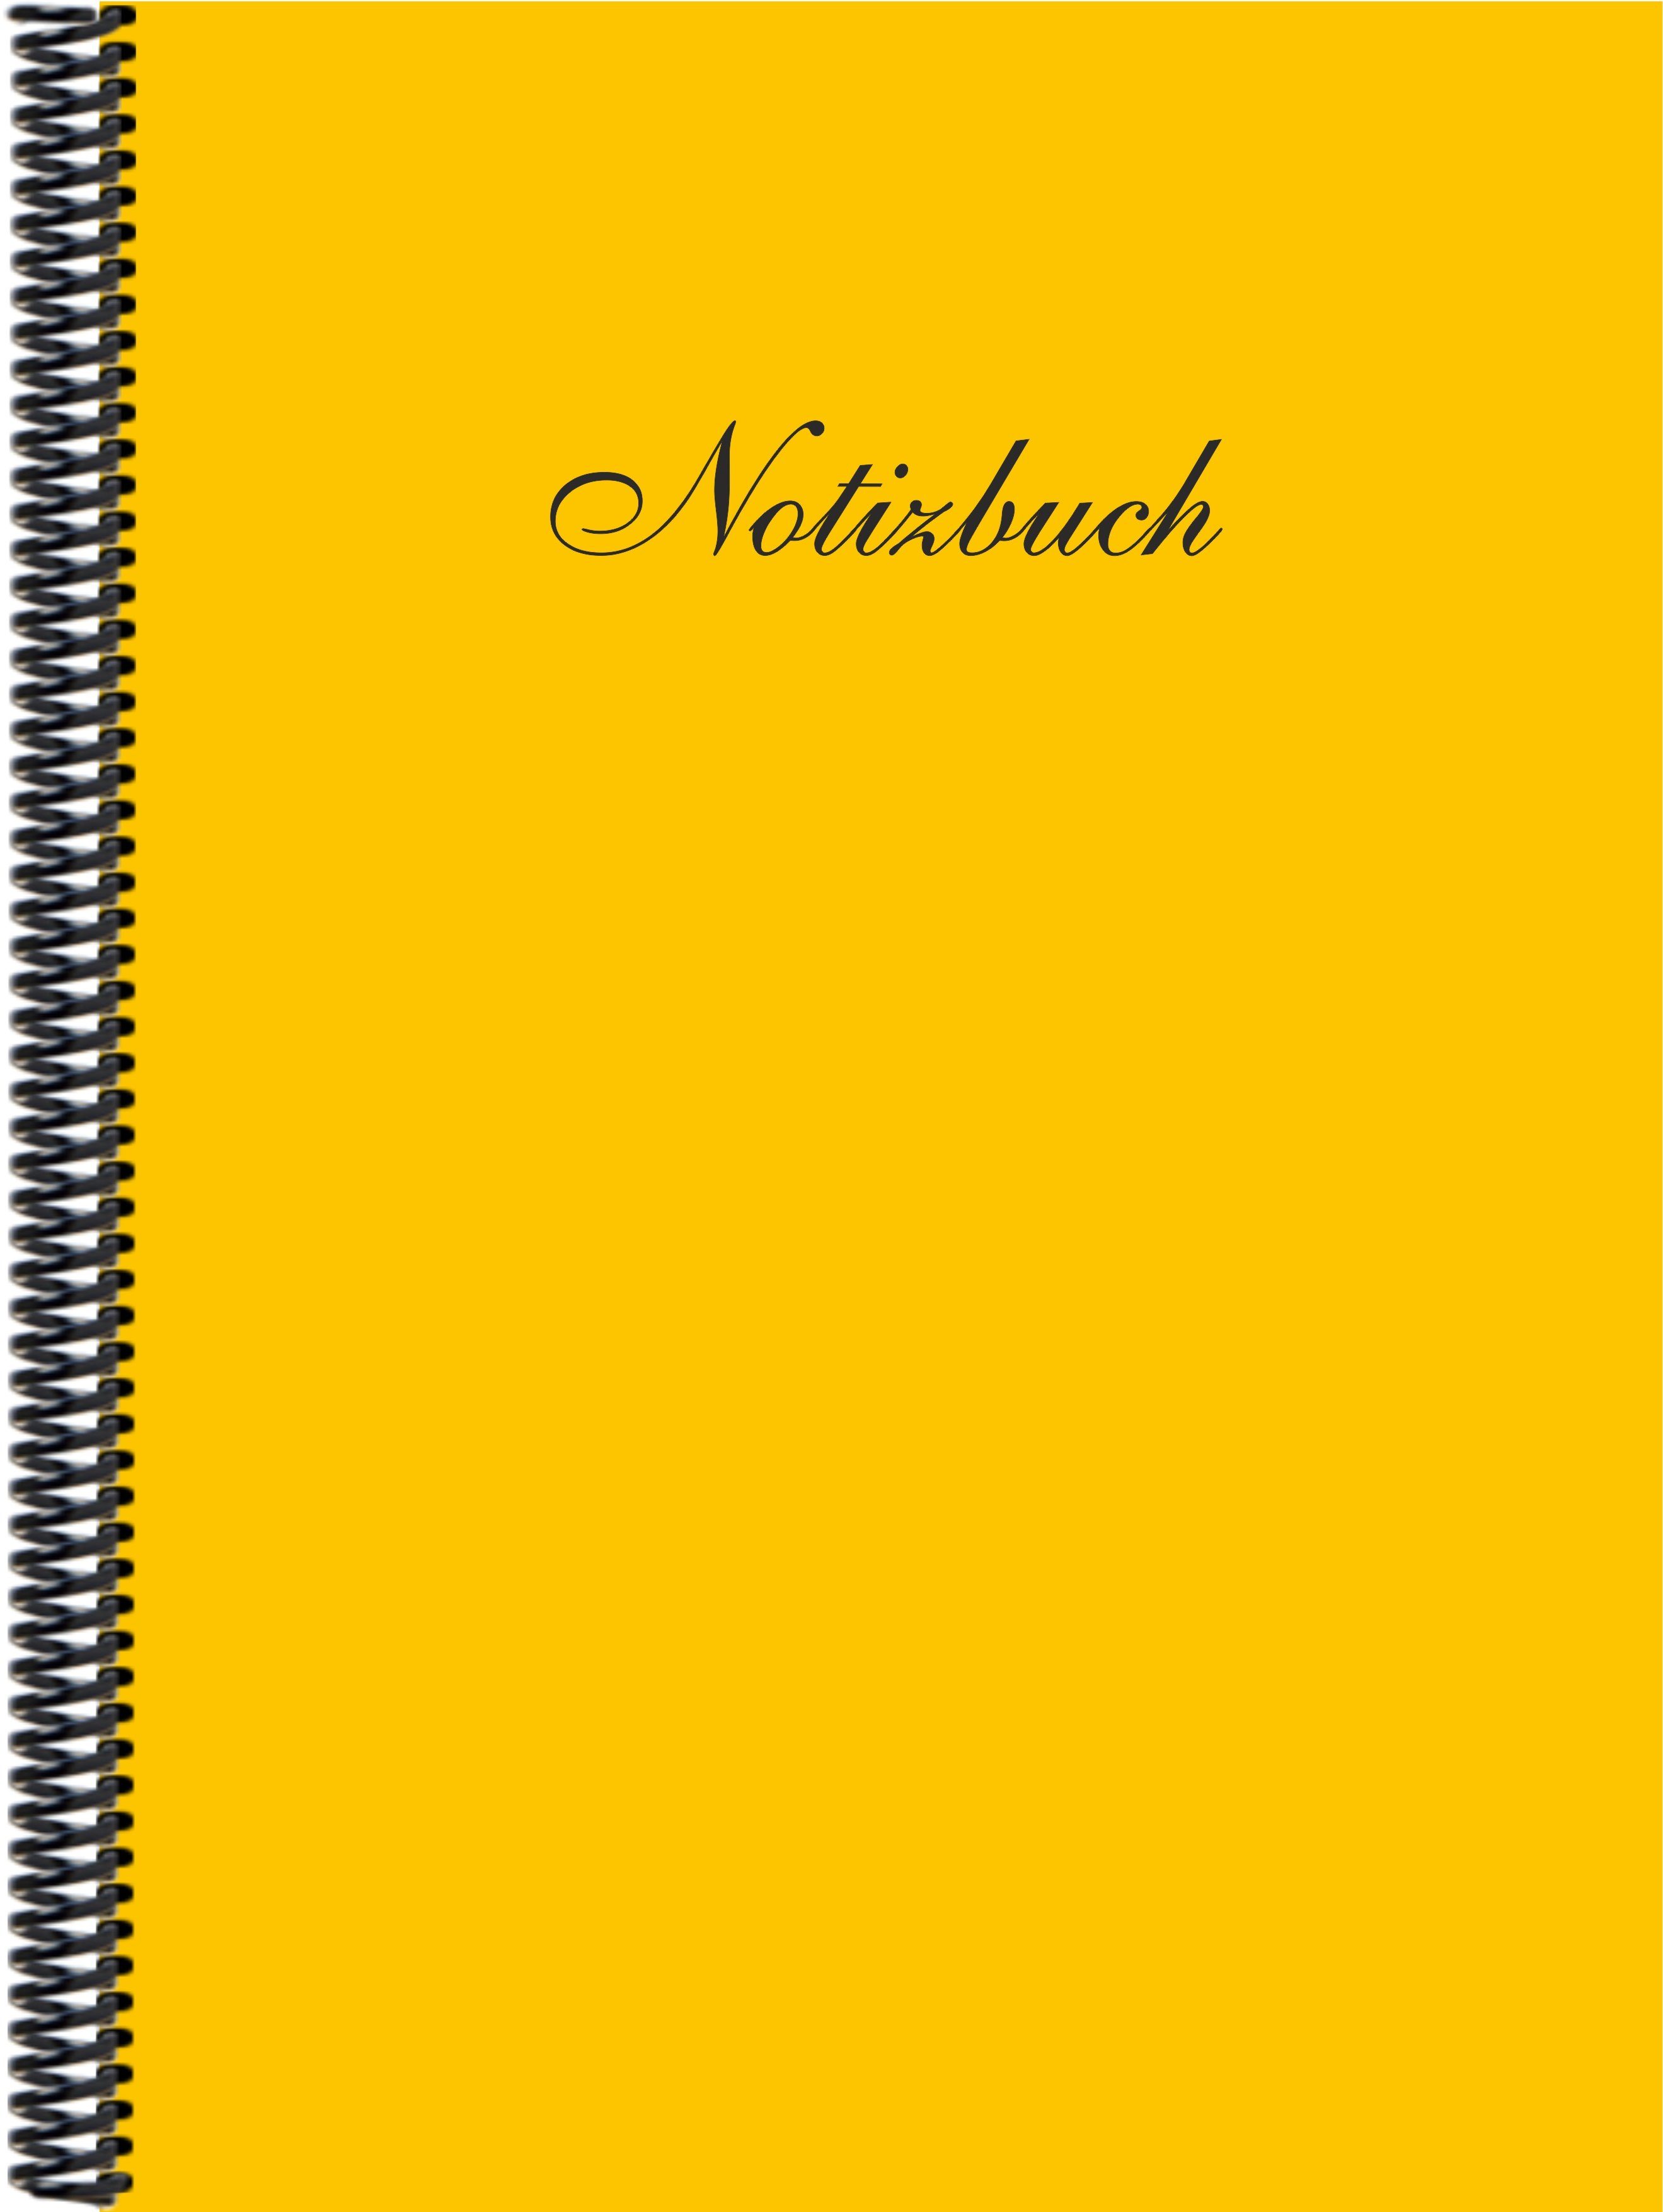 E&Z in blanko, Notizbuch Gmbh der DINA4 goldgelb Notizbuch Verlag Trendfarbe